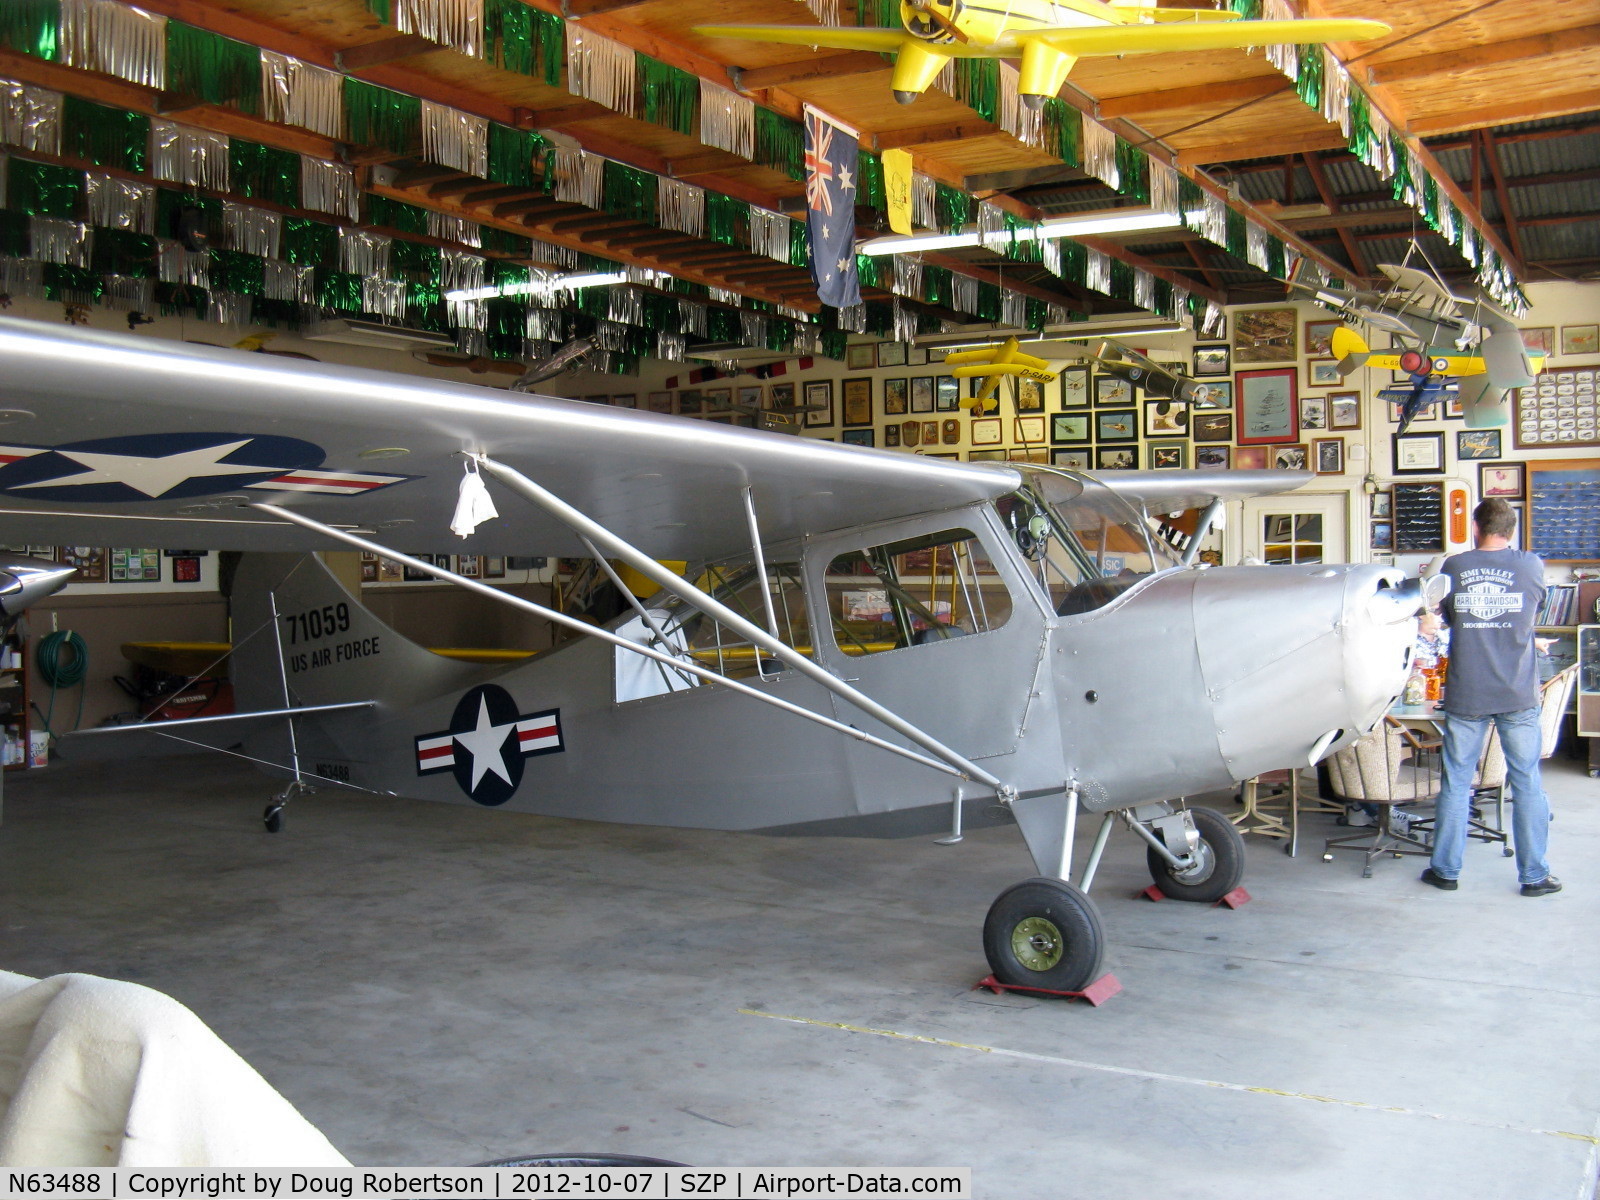 N63488, 1947 Aeronca 7BCM C/N 7BCM-276, 1947 Aeronca 7BCM as L-16B, Continental C85 85 Hp, in the Quinn Aviation Museum of Santa Paula hangar